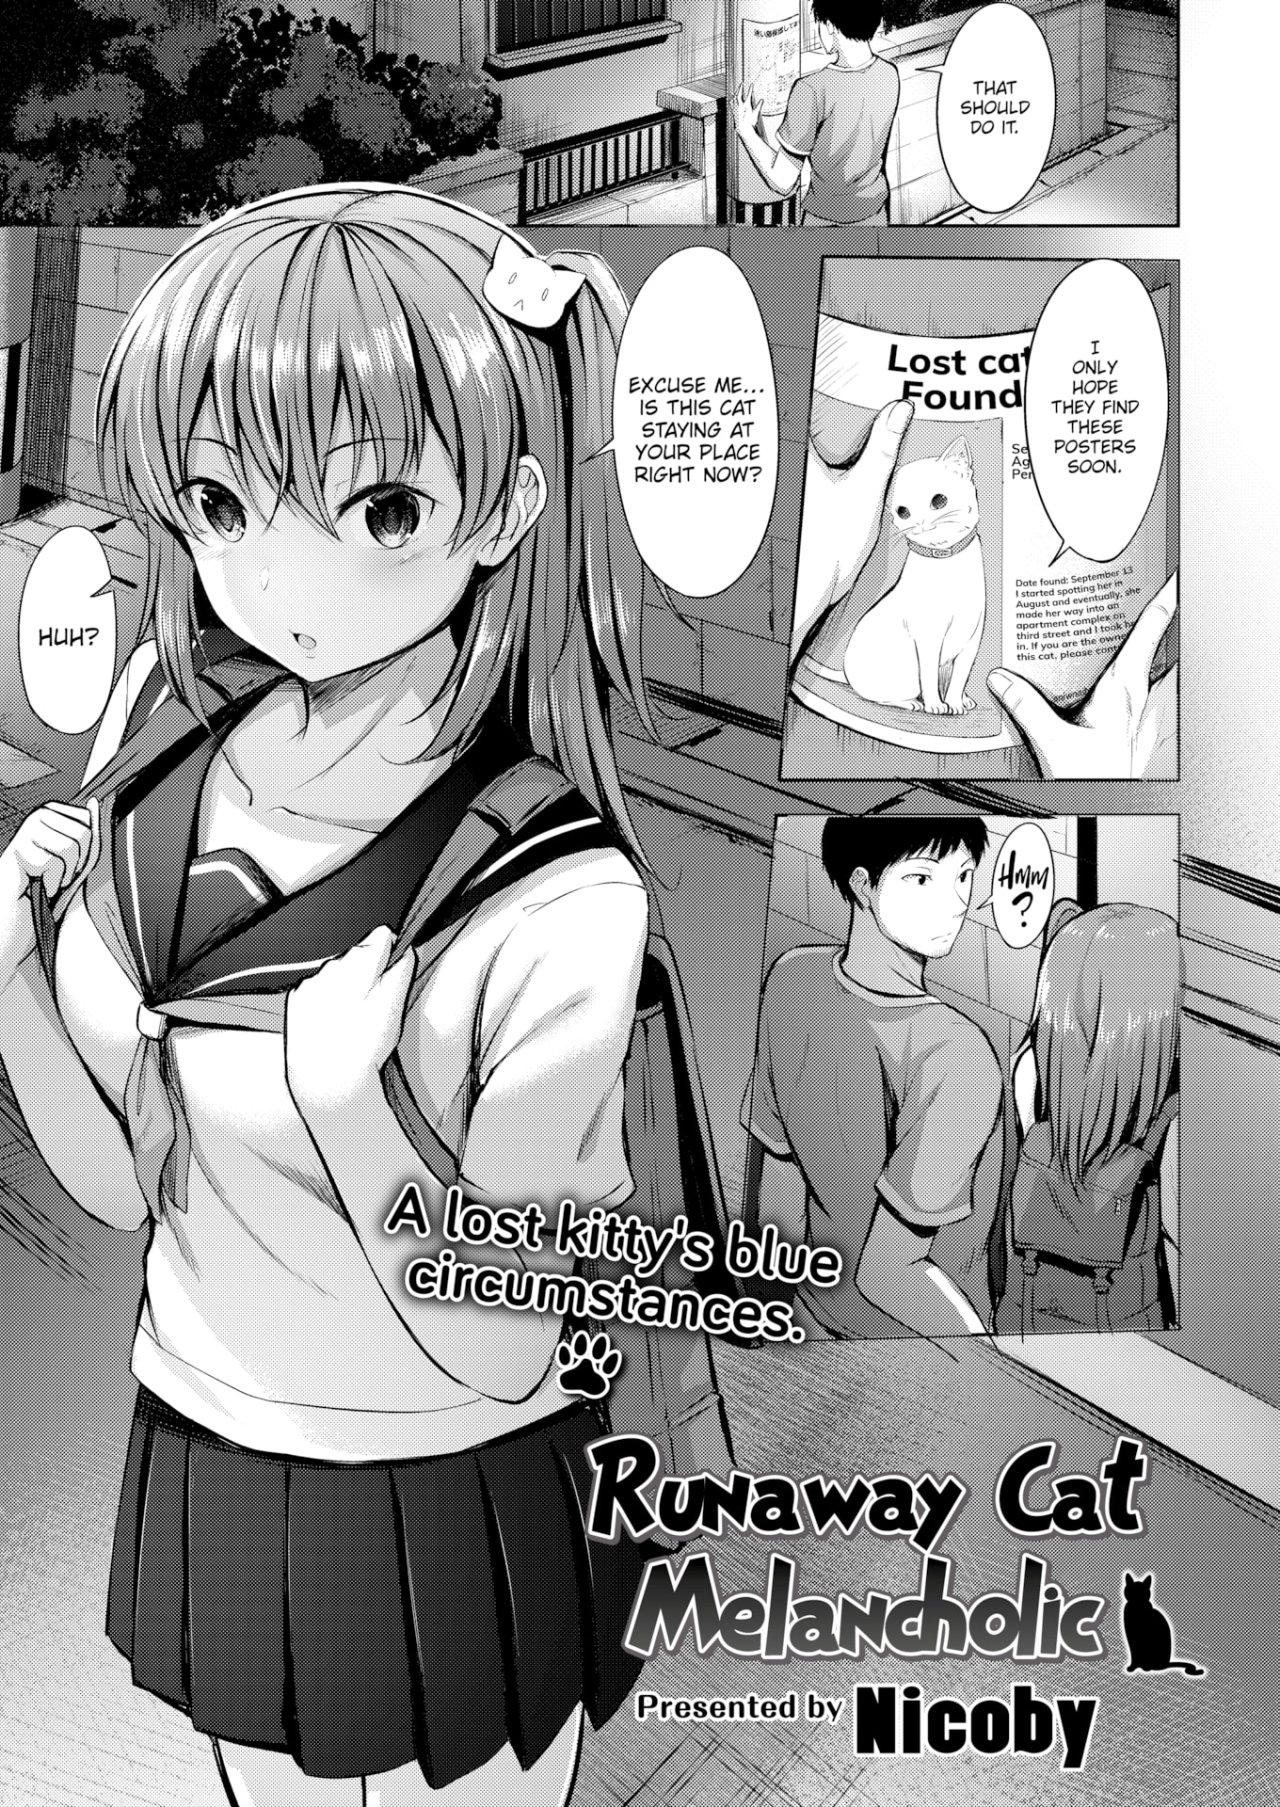 Runaway Cat Melancholic - 0